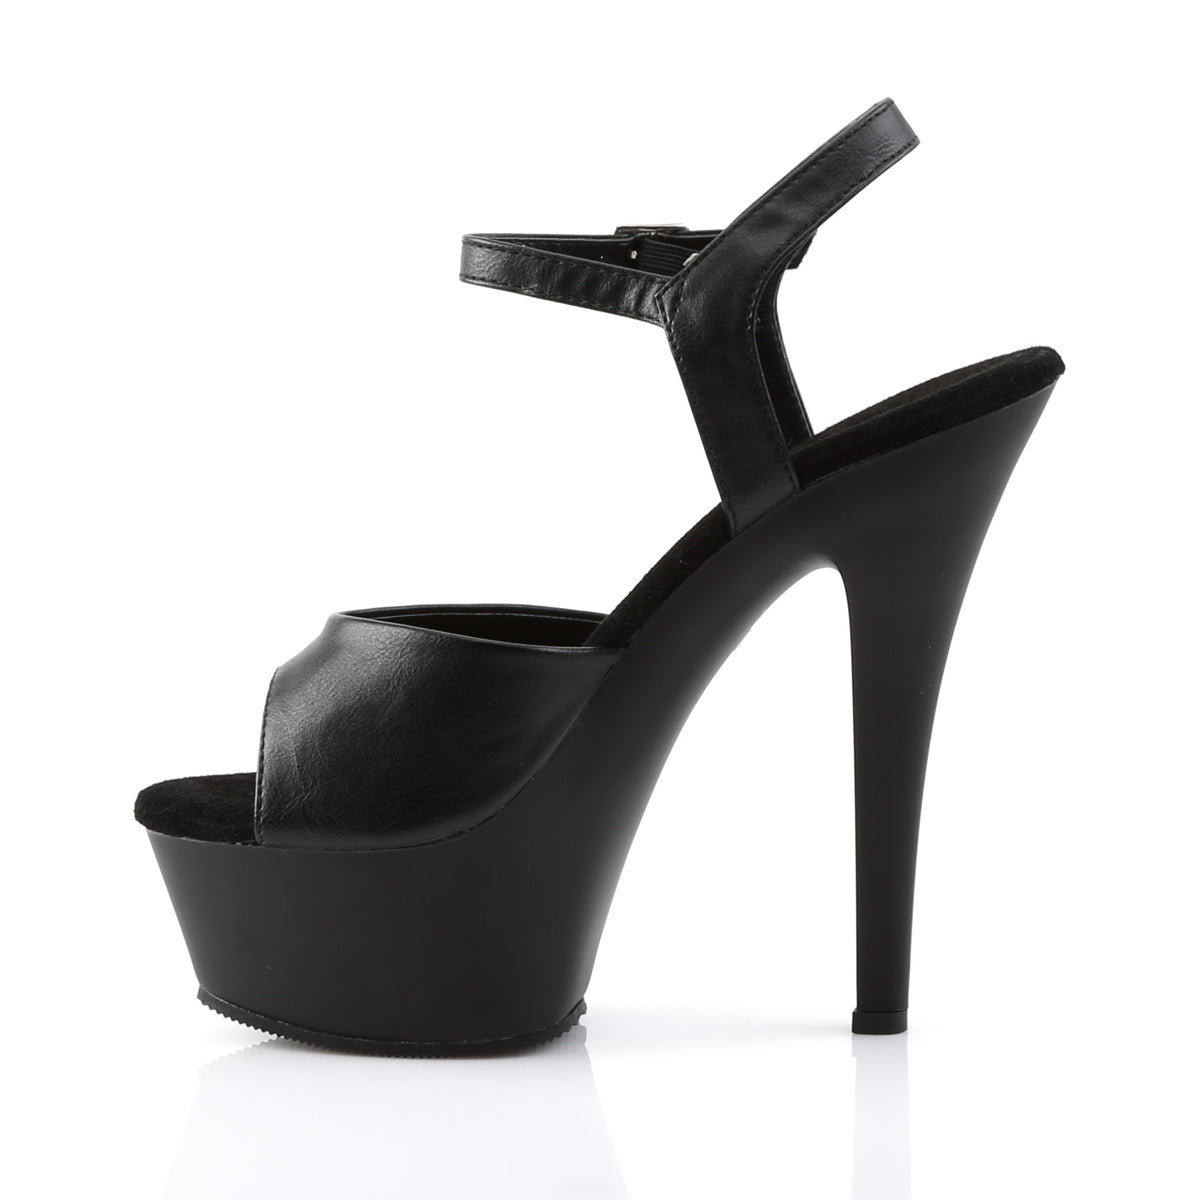 KISS-209 Pleaser 6 Inch Heel Black Pole Dancing Platforms-Pleaser- Sexy Shoes Pole Dance Heels